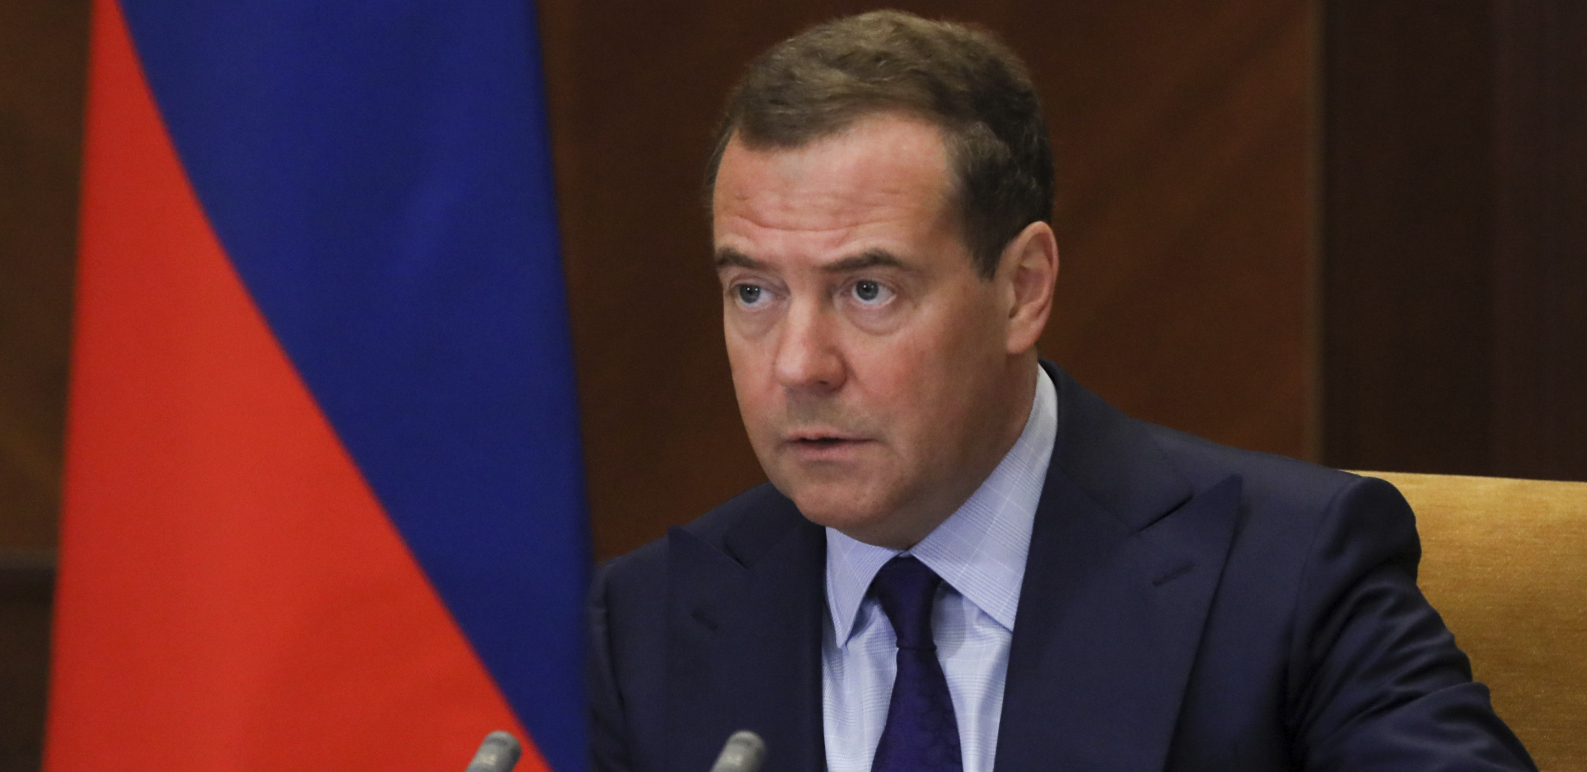 "NEMAČKA JE NEPRIJATELJSKA ZEMLJA" Medvedev optužuje da se vodi hibridni rat protiv Rusije